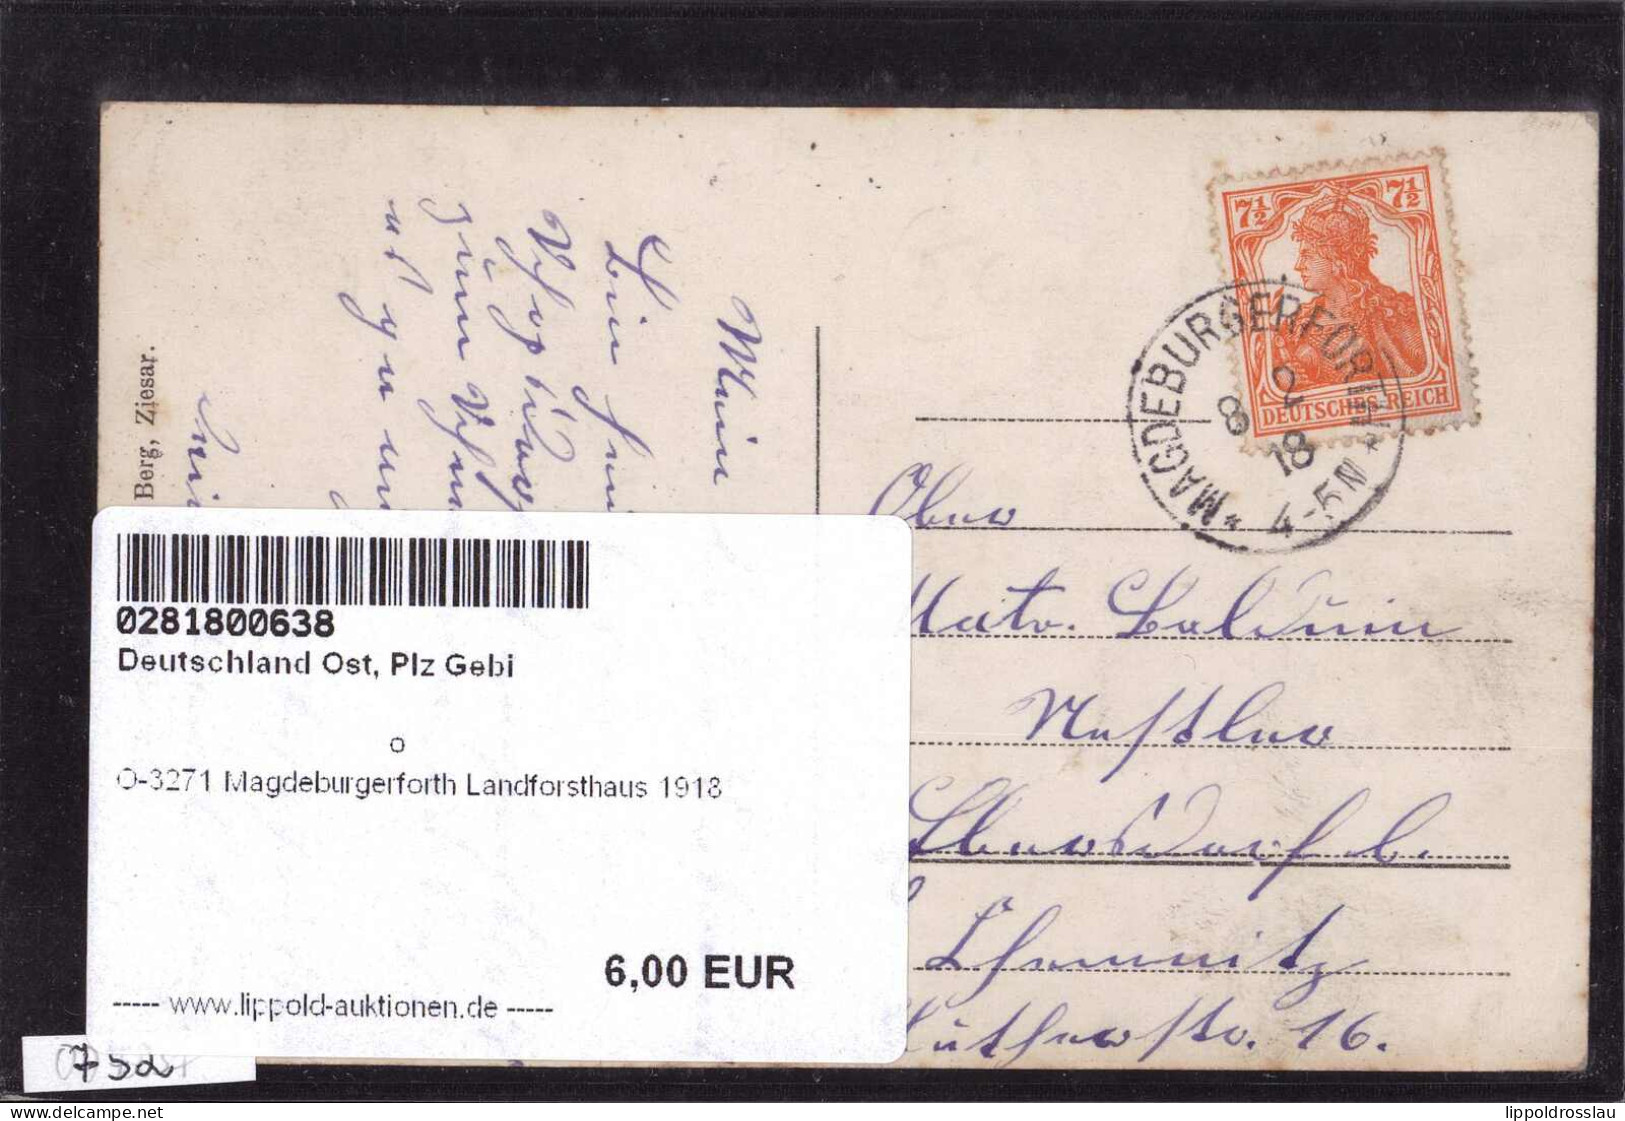 Gest. O-3271 Magdeburgerforth Landforsthaus 1918 - Burg